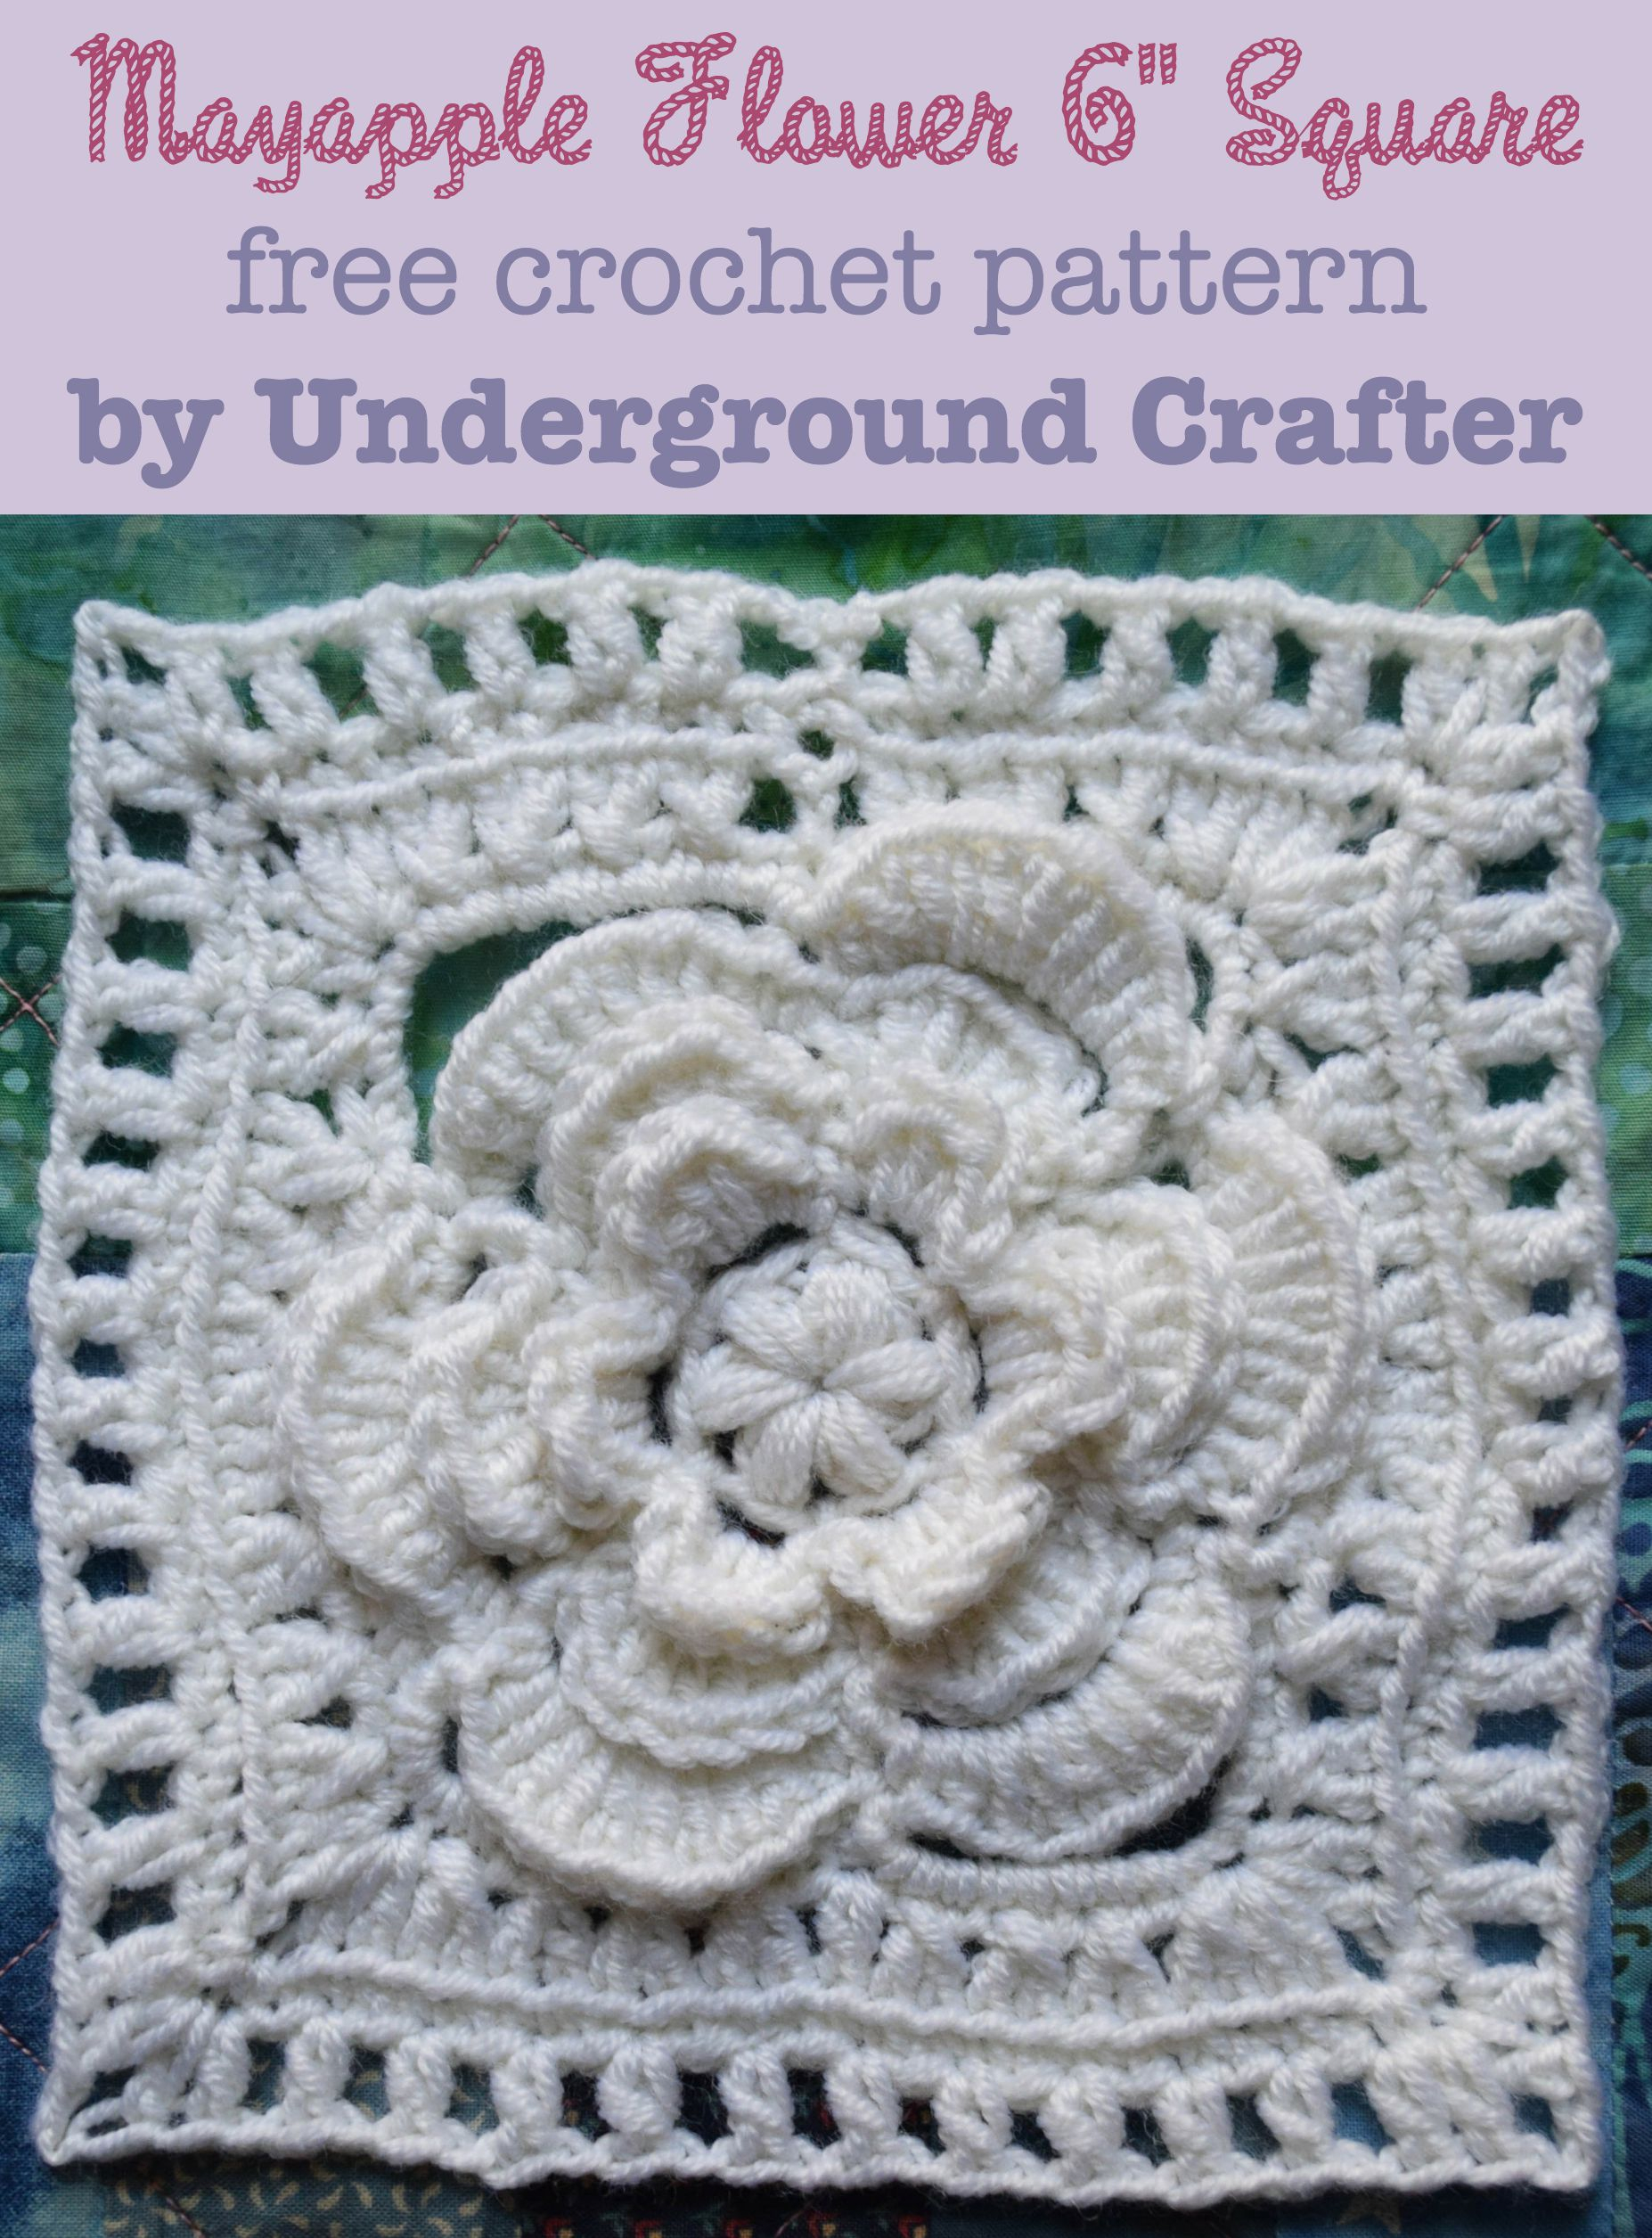 Crochet Squares Patterns Crochet Pattern Mayapple Flower Square Underground Crafter